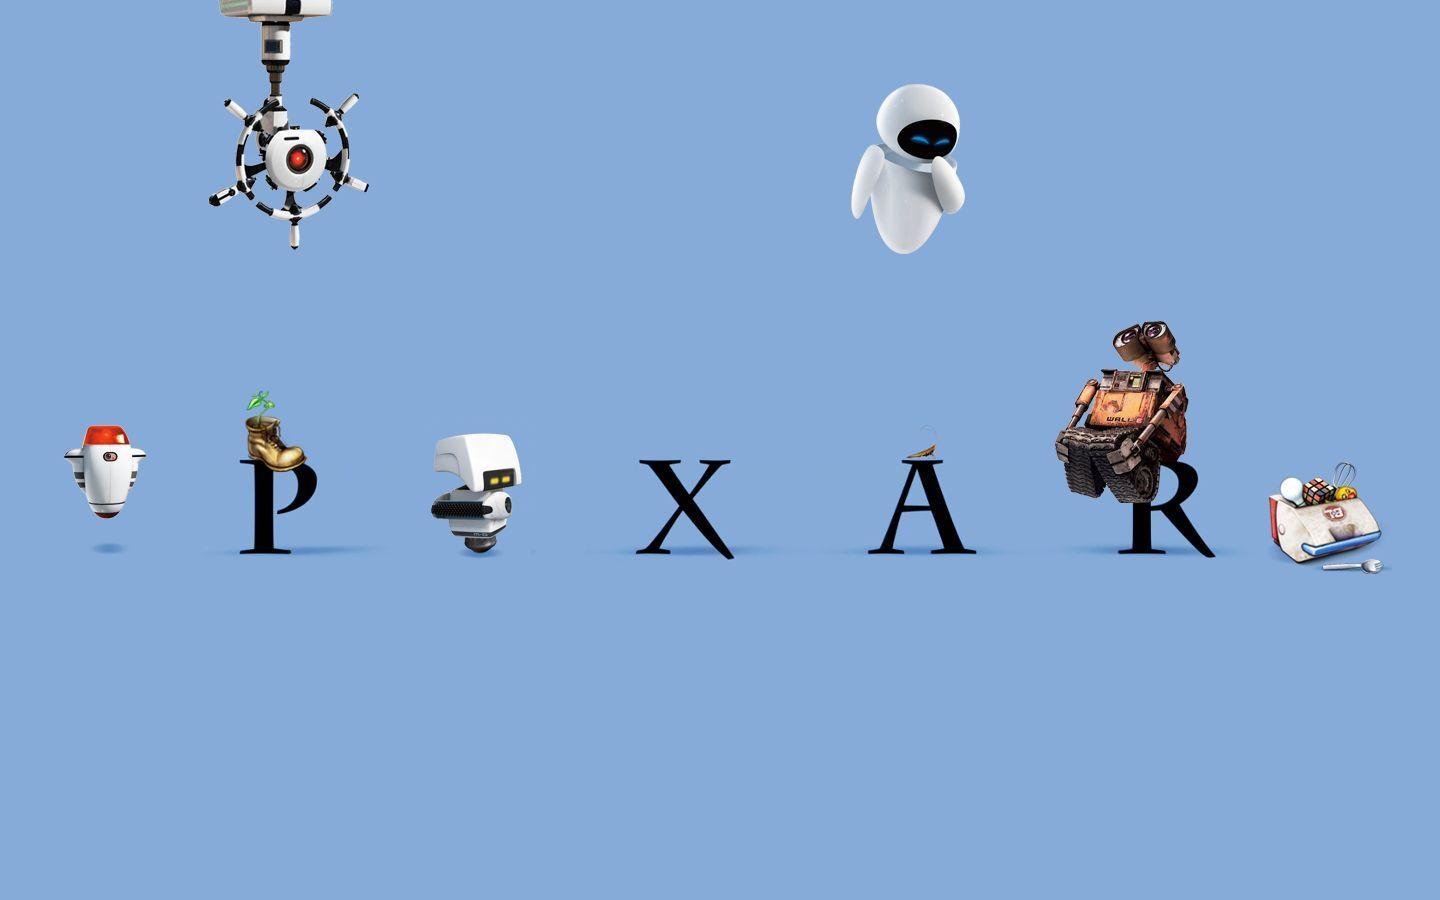 Wall-E Disney Pixar Logo - Pin by Ari Cornett on Pixar's Wall-e | Pixar, Pixar movies, Disney ...